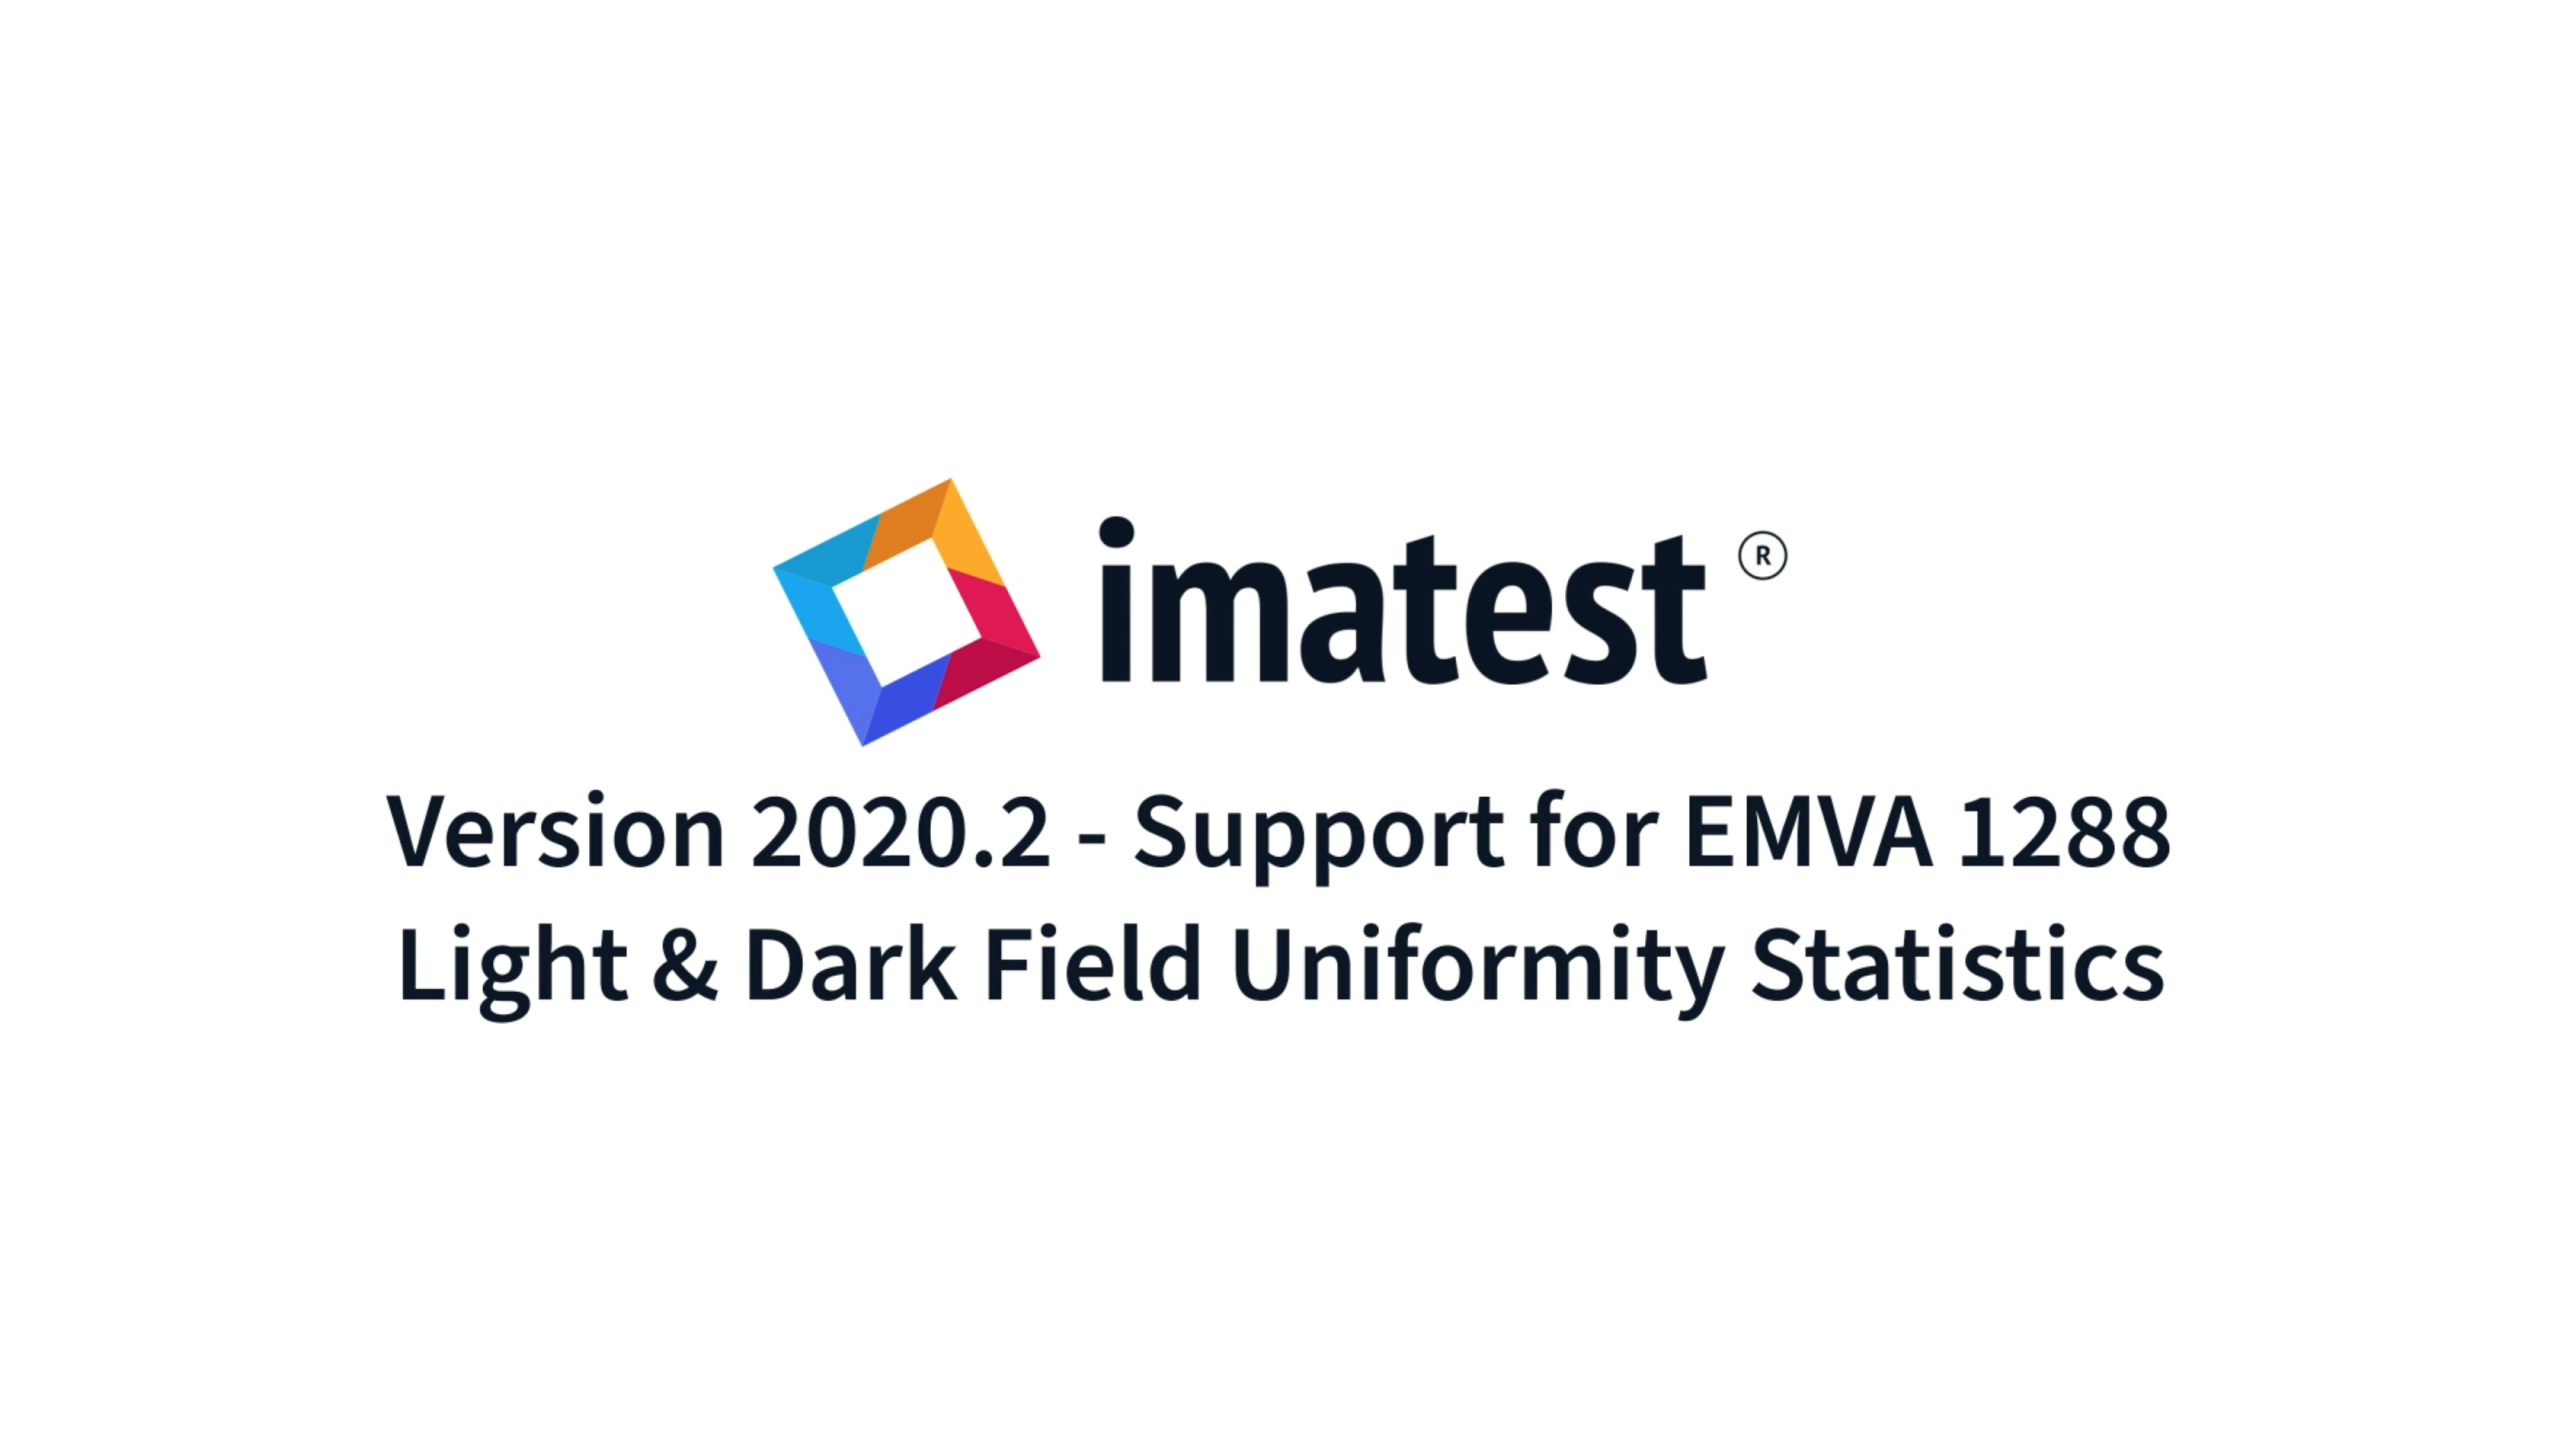 Imatest 2020.2 supports EMVA1288